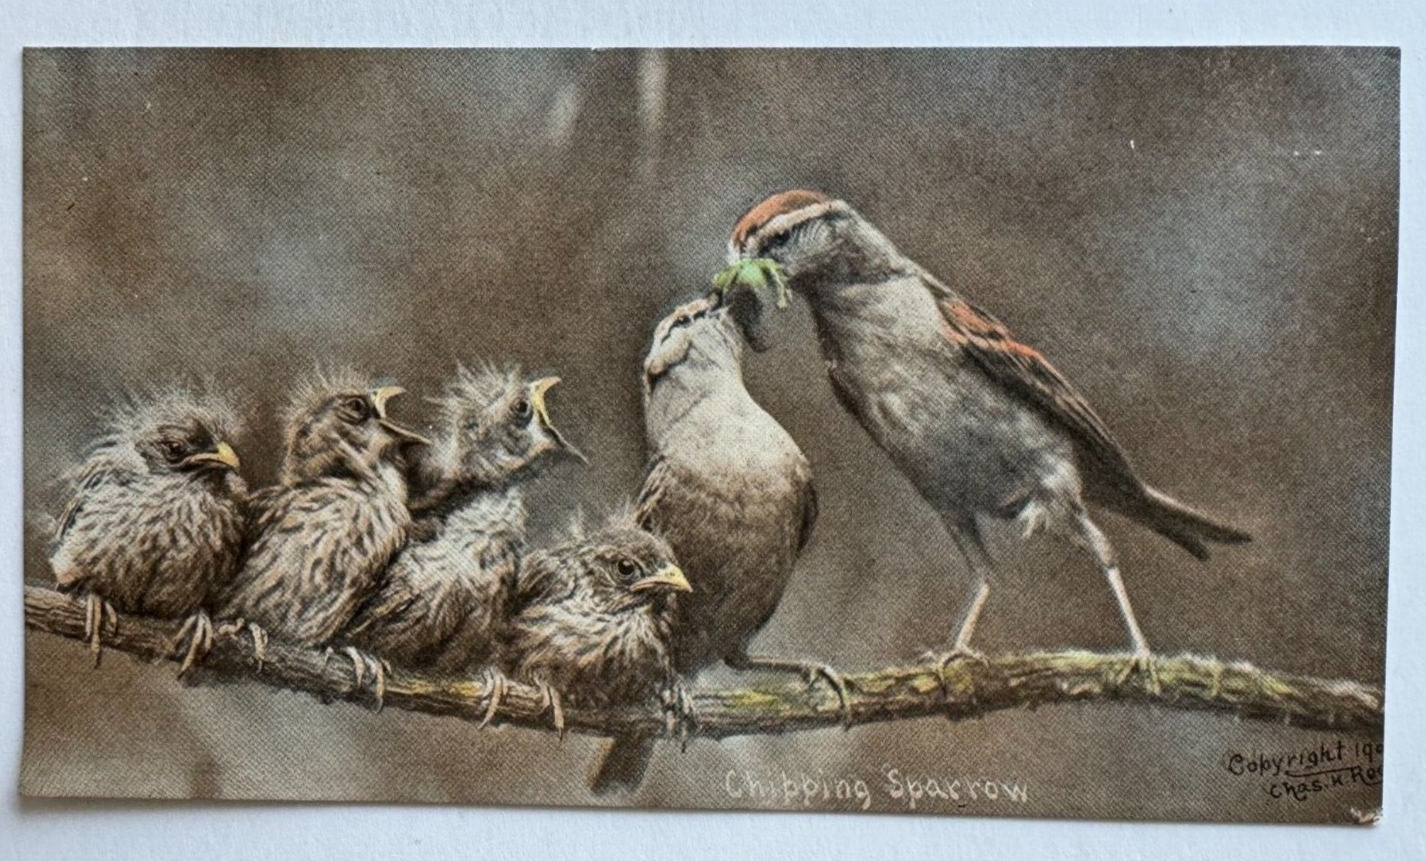 Vintage ca 1900s Postcard Birds Chipping Sparrow chicks tree limb (Charles Reed)